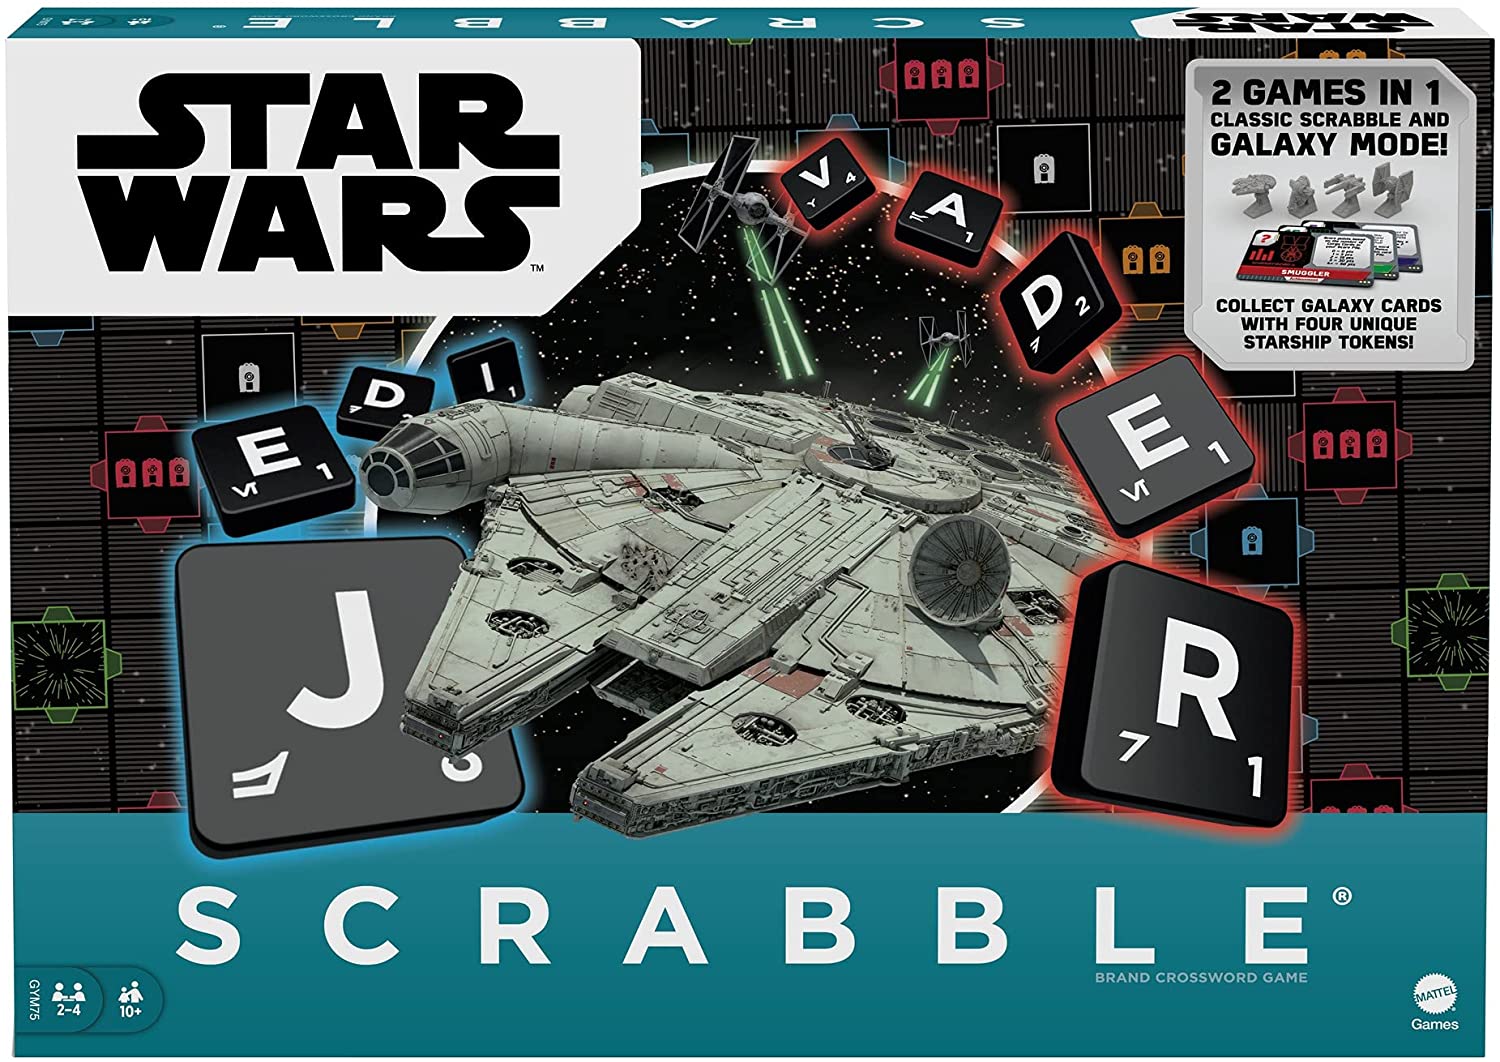 Star Wars Scrabble boardgame